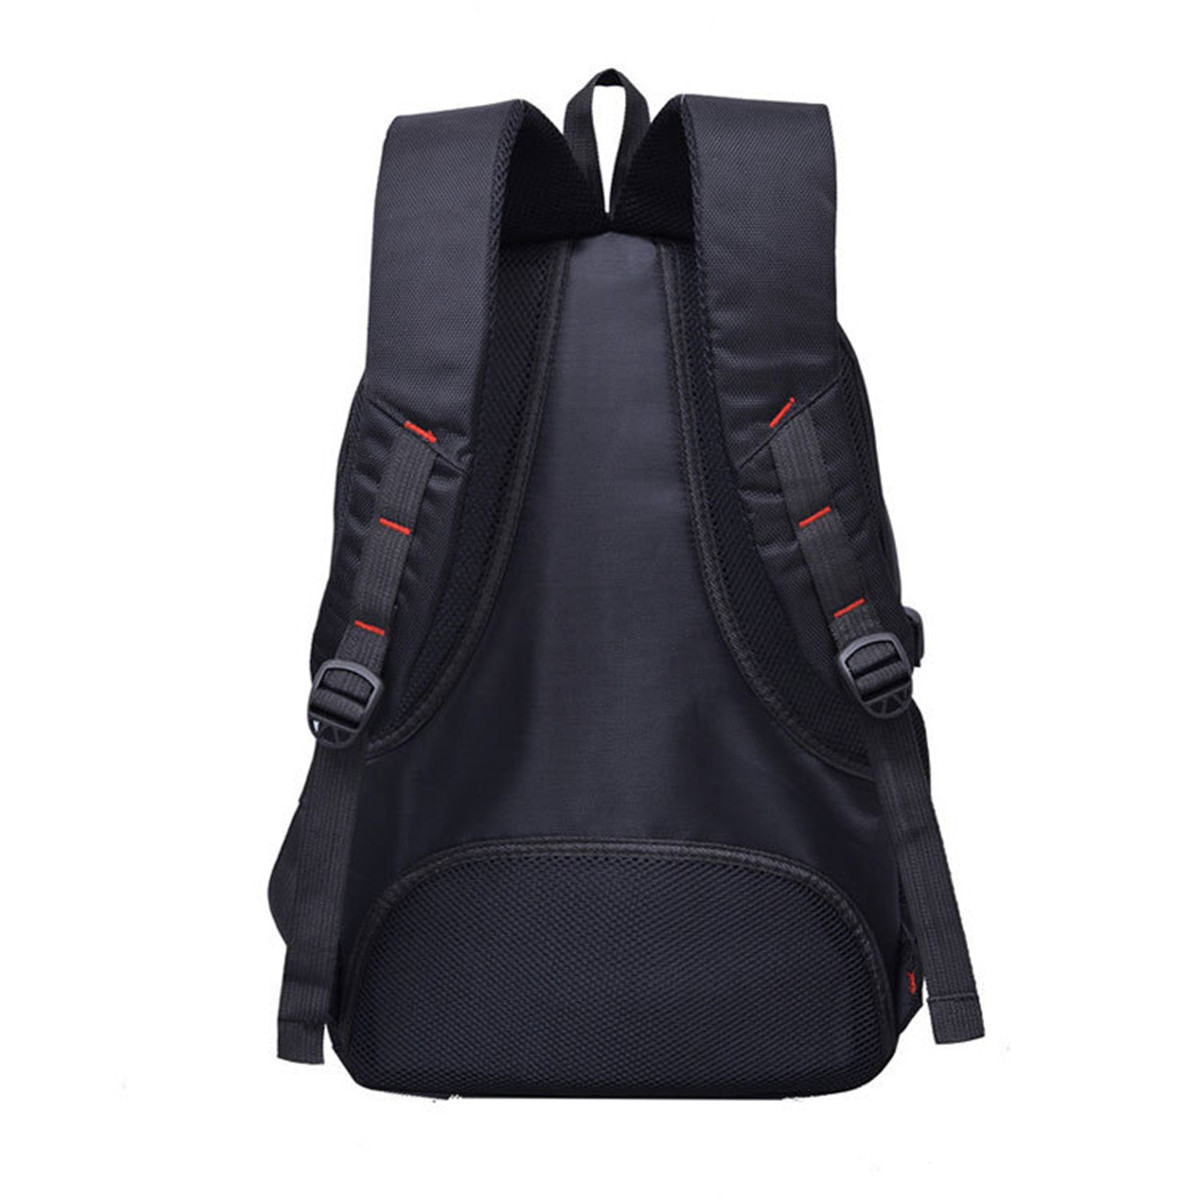 IPReetrade-156inch-Waterproof-Laptop-Backpack-Nylon-Business-Travel-Rucksack-1166015-5